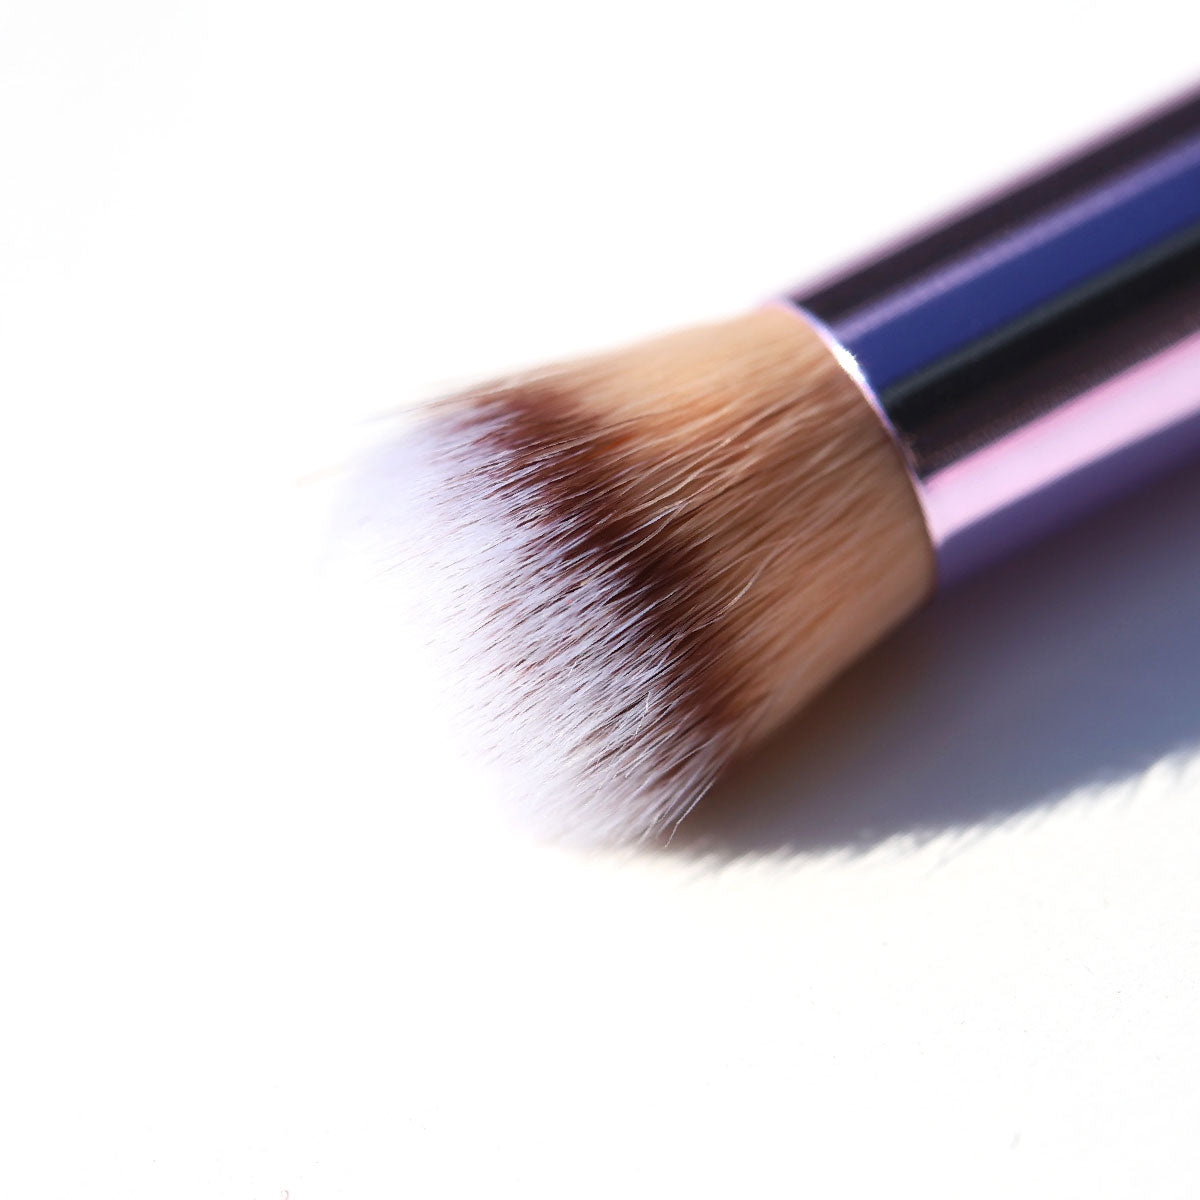 purple eyeshadow blending brush - 407 Deluxe Buffer Brush - half caked makeup